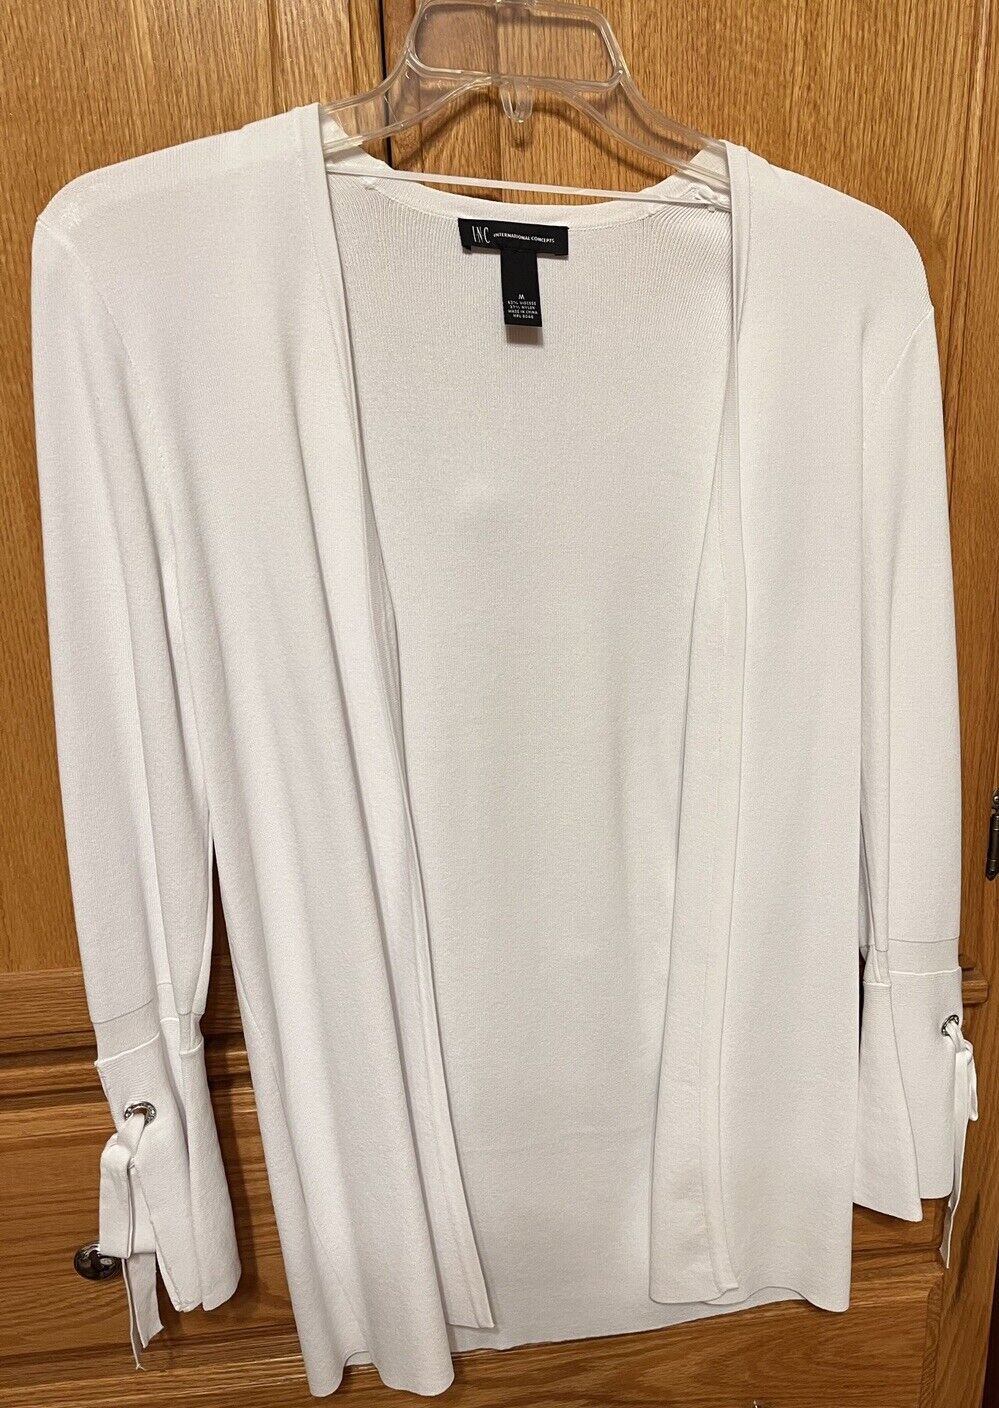 Michael Kors Ladies Sweater - image 1